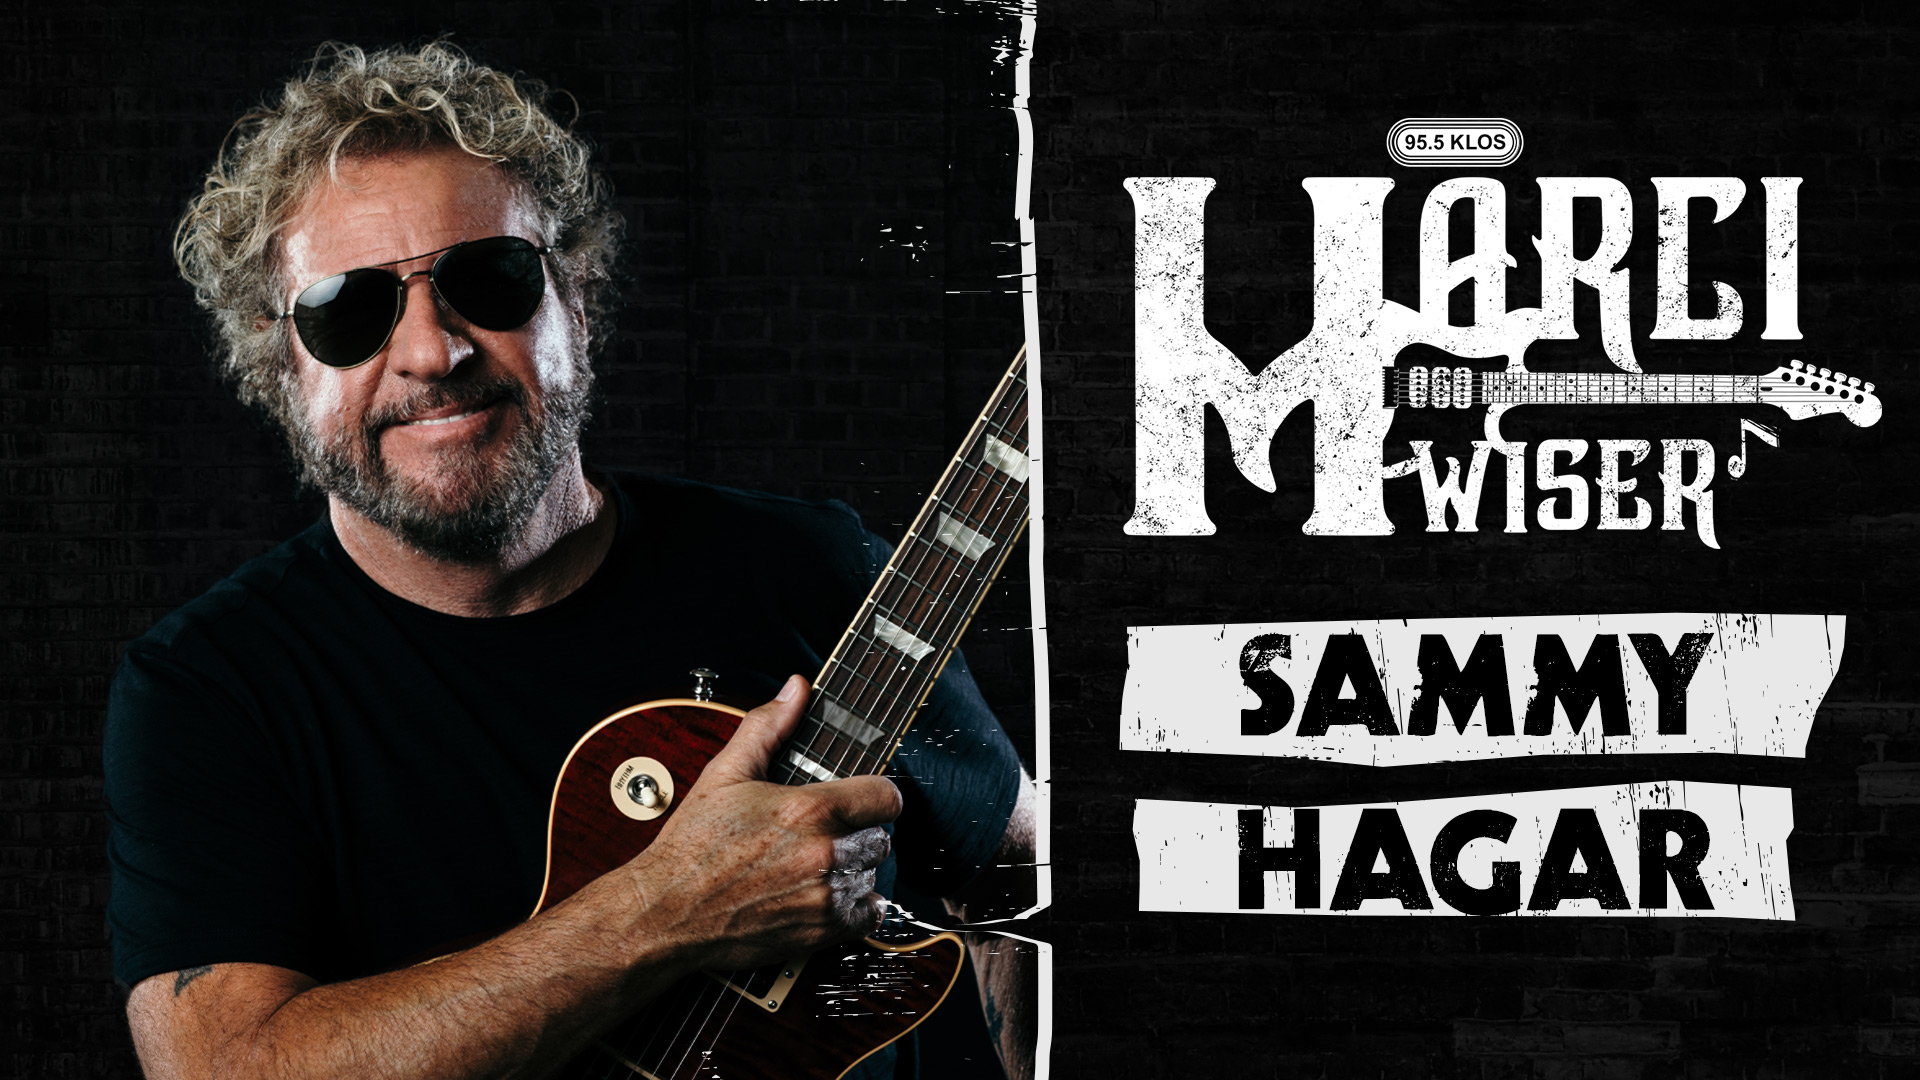 Sammy Hagar Talks Live Shows, Sammy Music, His Record Label Wanting Van Halen To Change Their Name & More!